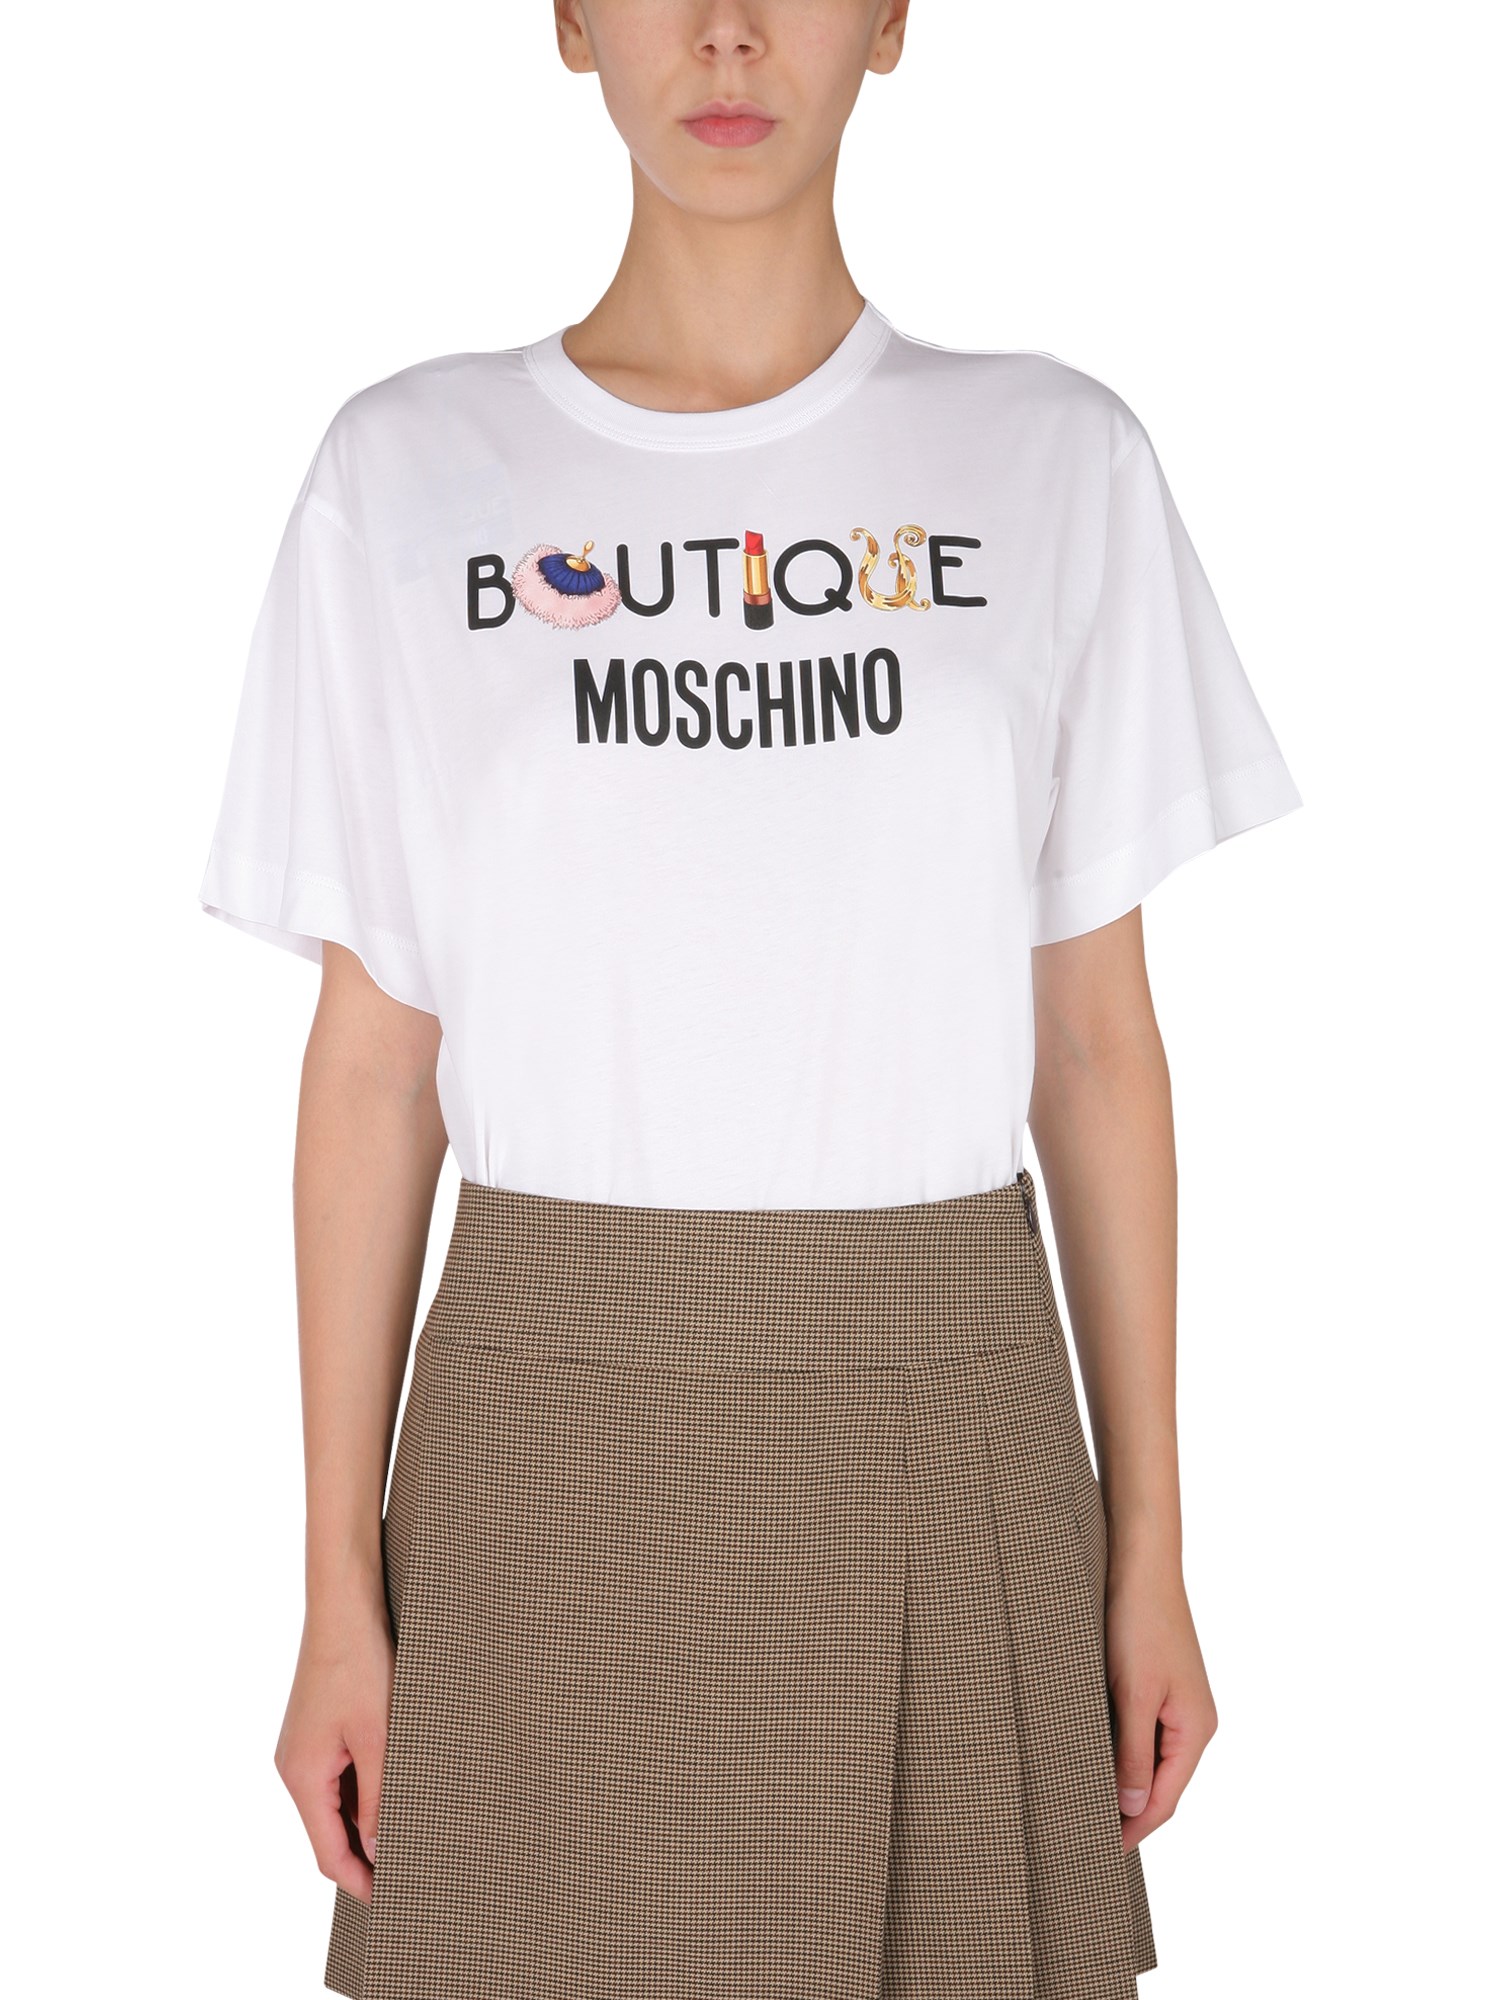 boutique moschino t-shirt riding kit